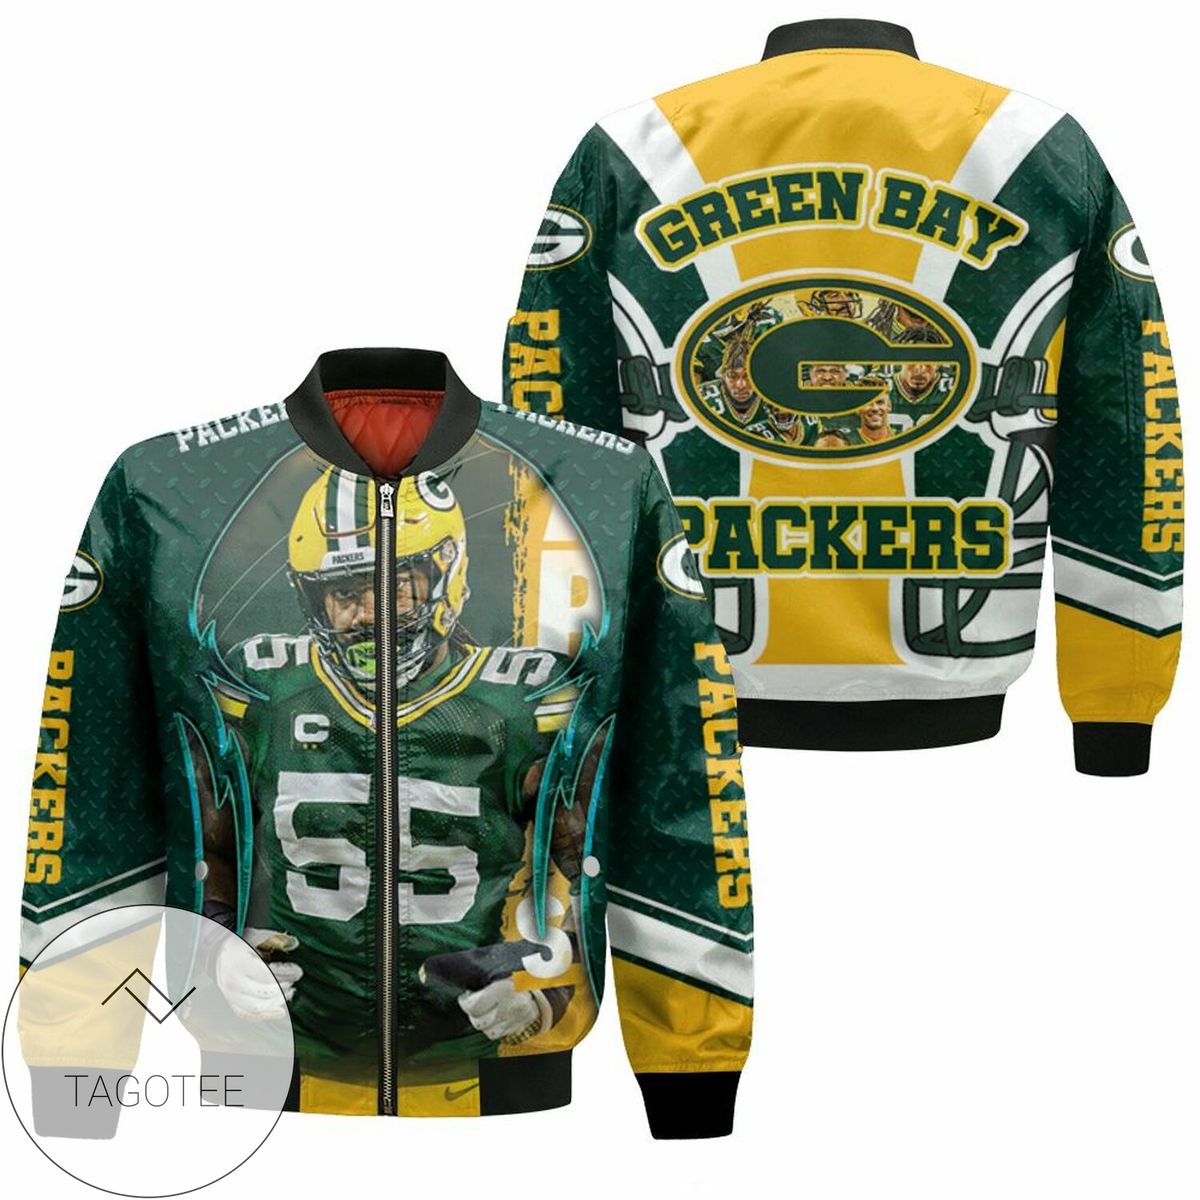 Zadarius Smith 55 Green Bay Packers Nfc North Division Champions Super Bowl 2021 Bomber Jacket